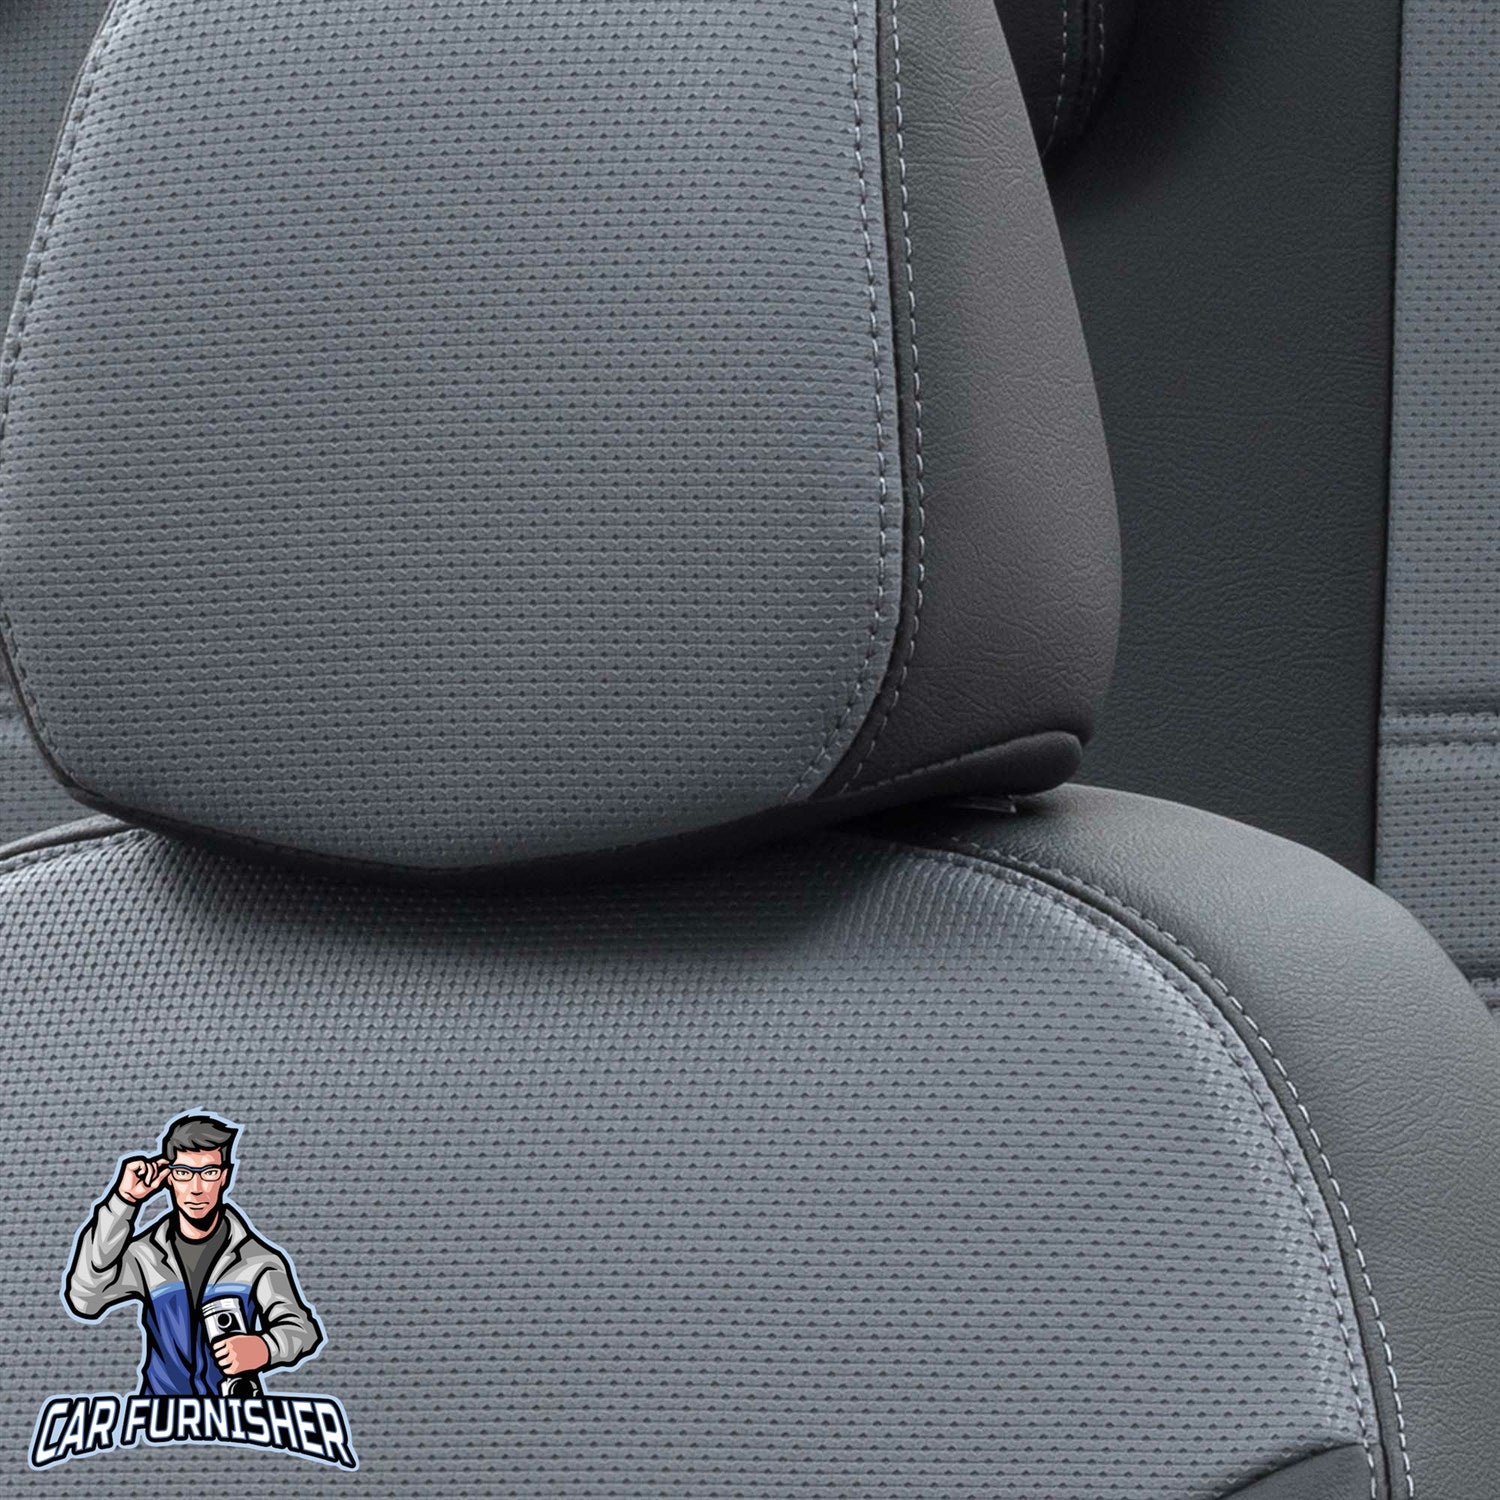 Fiat Egea Car Seat Covers 2015-2023 Std/Cross New York Design Smoked Black Full Set (5 Seats + Handrest) Leather & Fabric